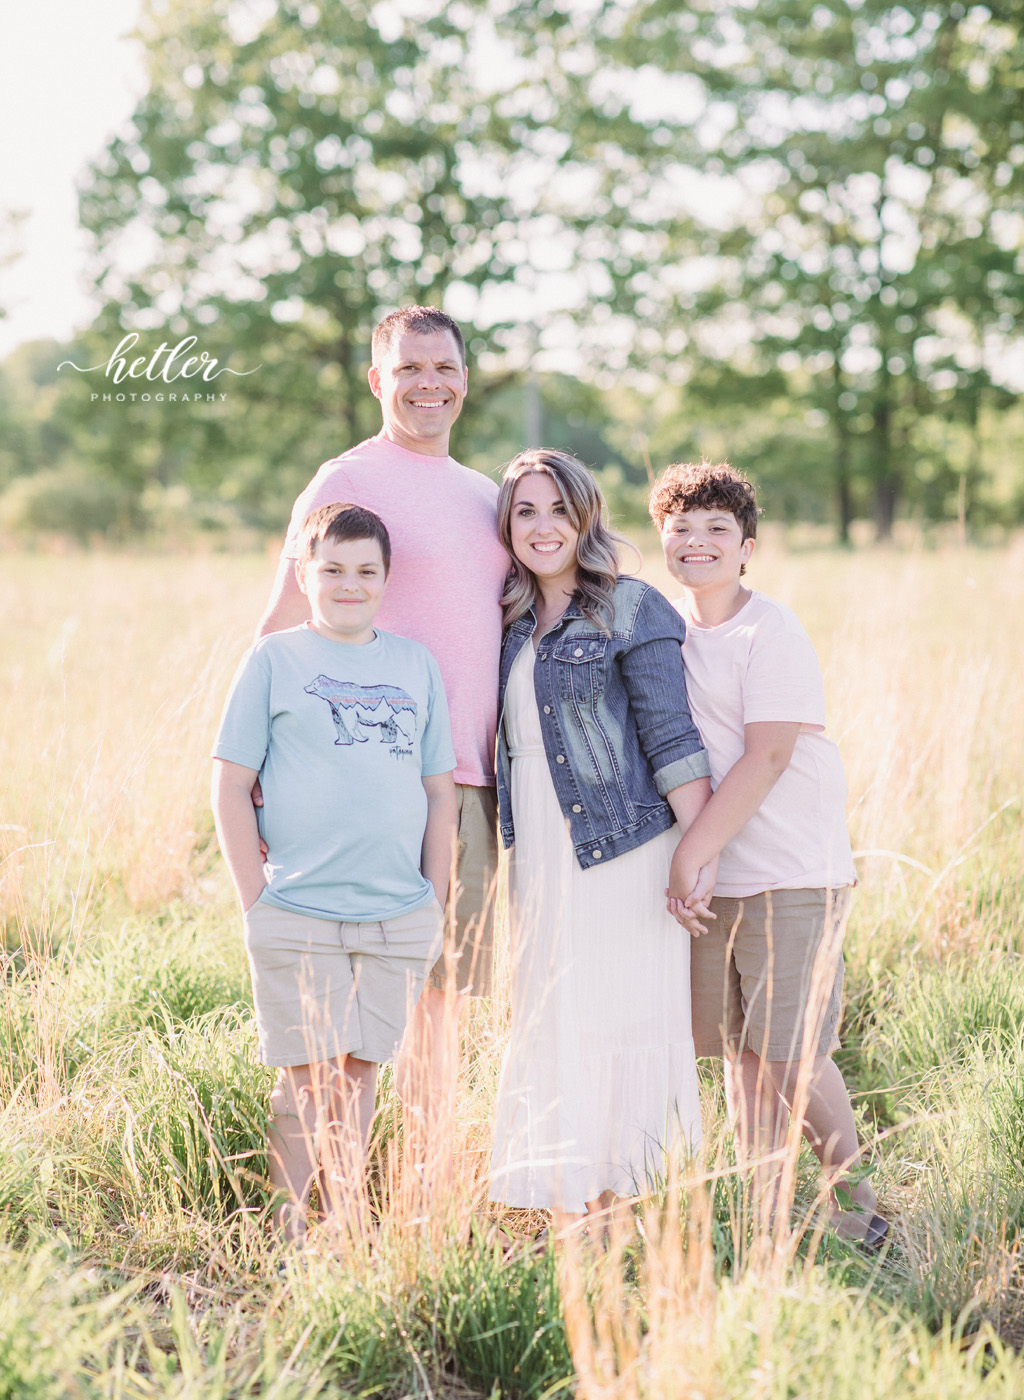 Newaygo Michigan family photos in a farm field with beautiful sunshine